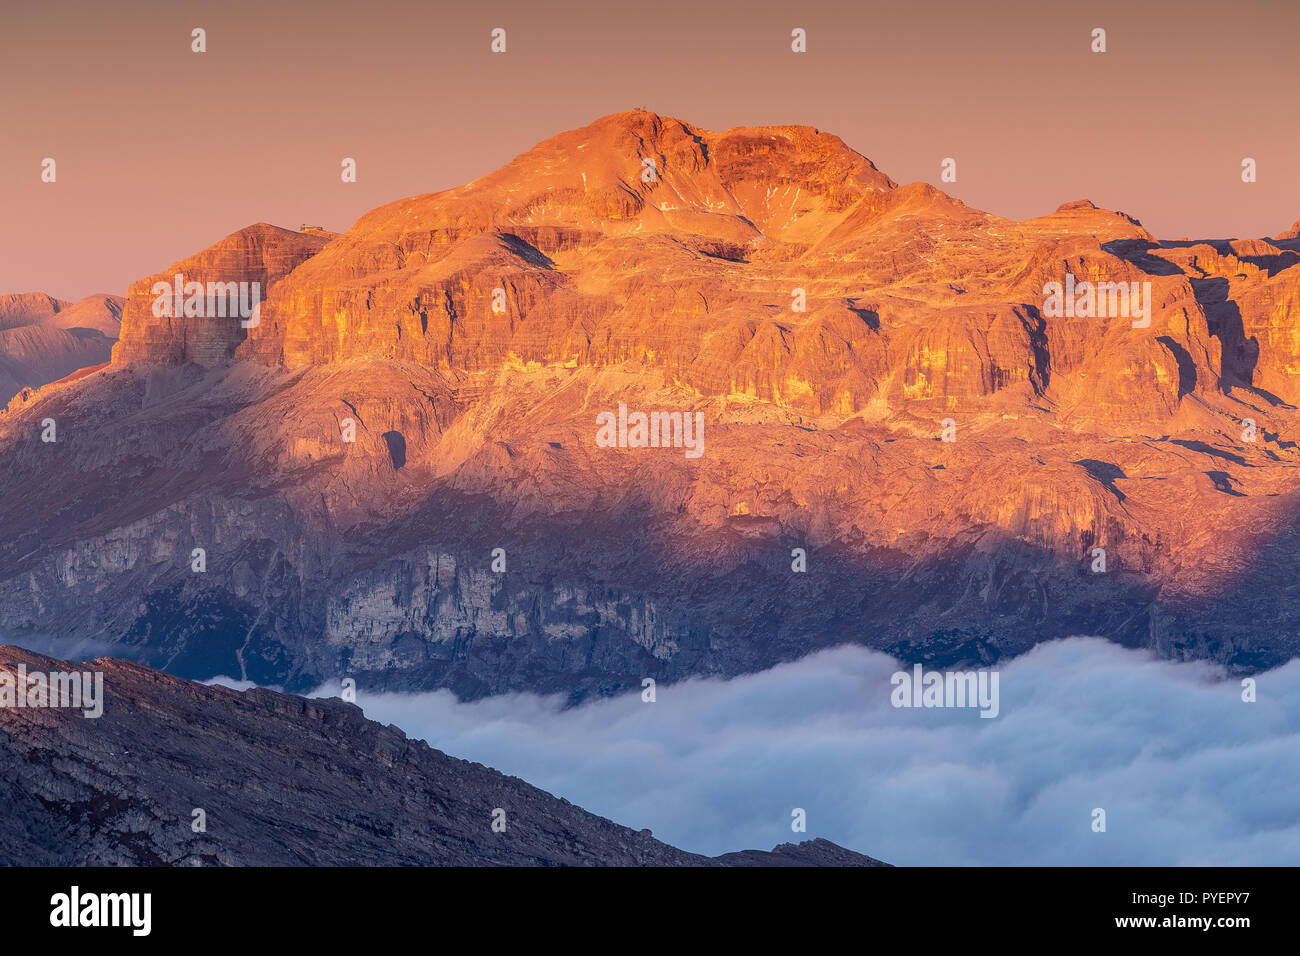 Alpenglow on the Sella mountain group and Piz Boè peak. Sunlight at sunrise. The Dolomites. Italian Alps. Europe. Stock Photo